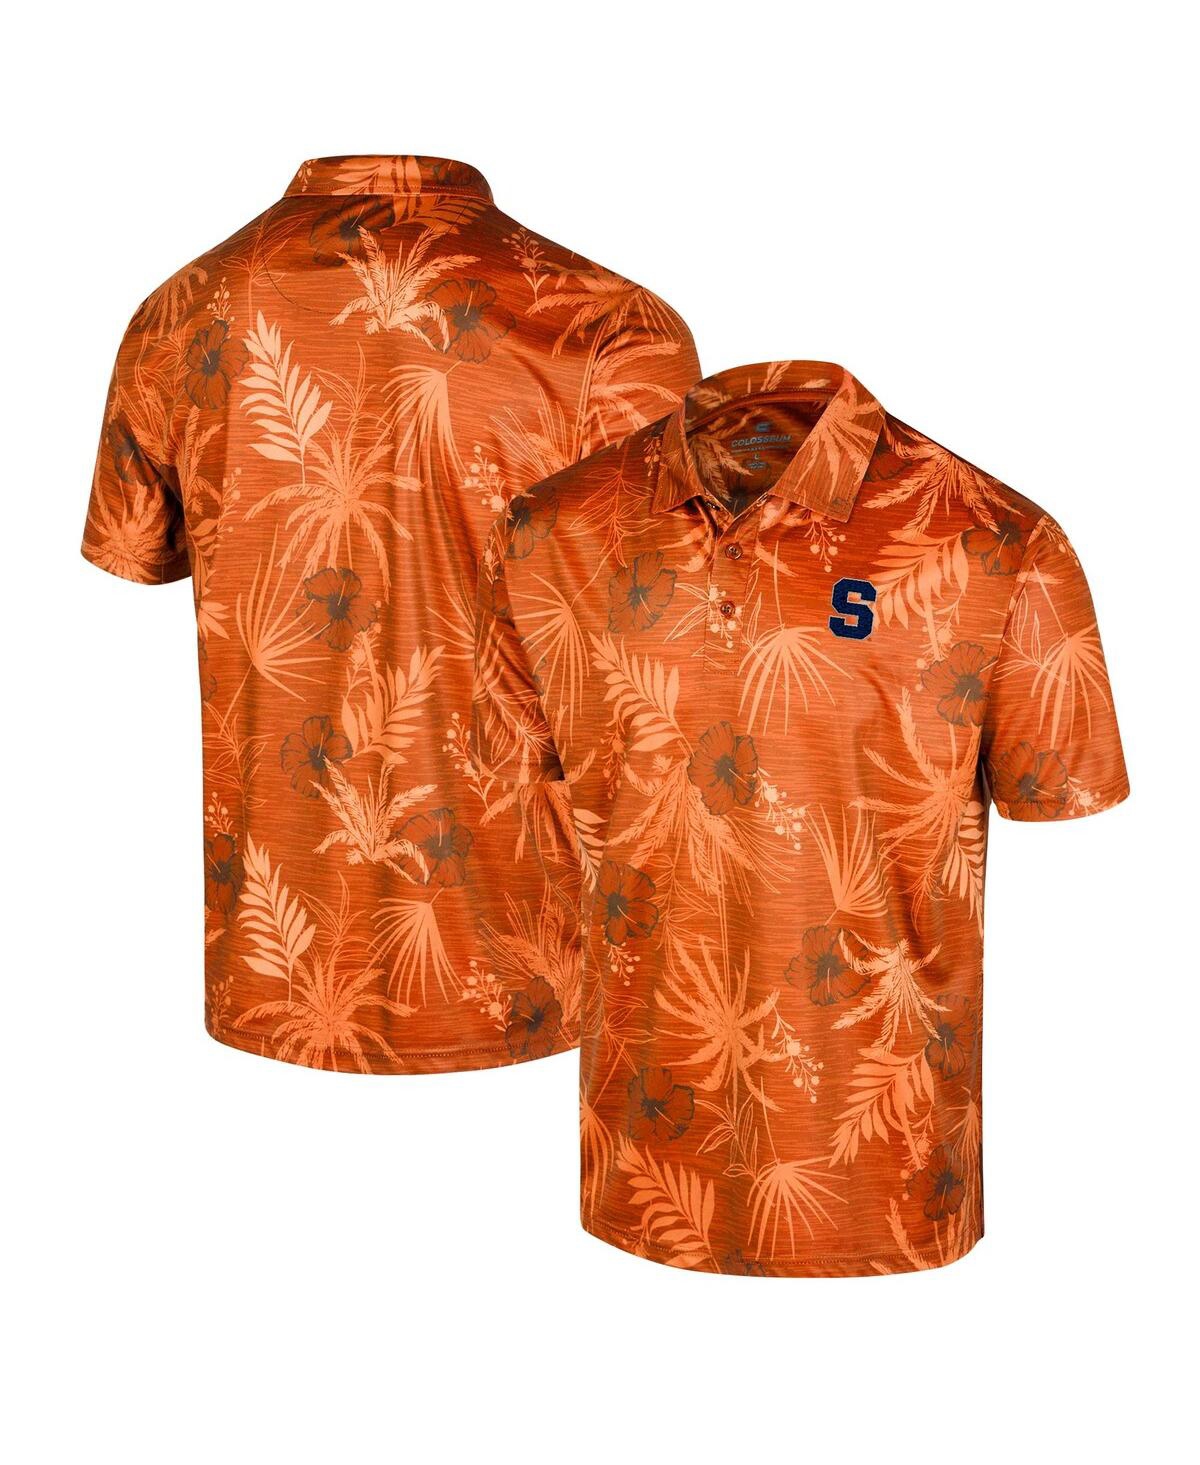 Shop Colosseum Men's  Orange Syracuse Orange Palms Team Polo Shirt